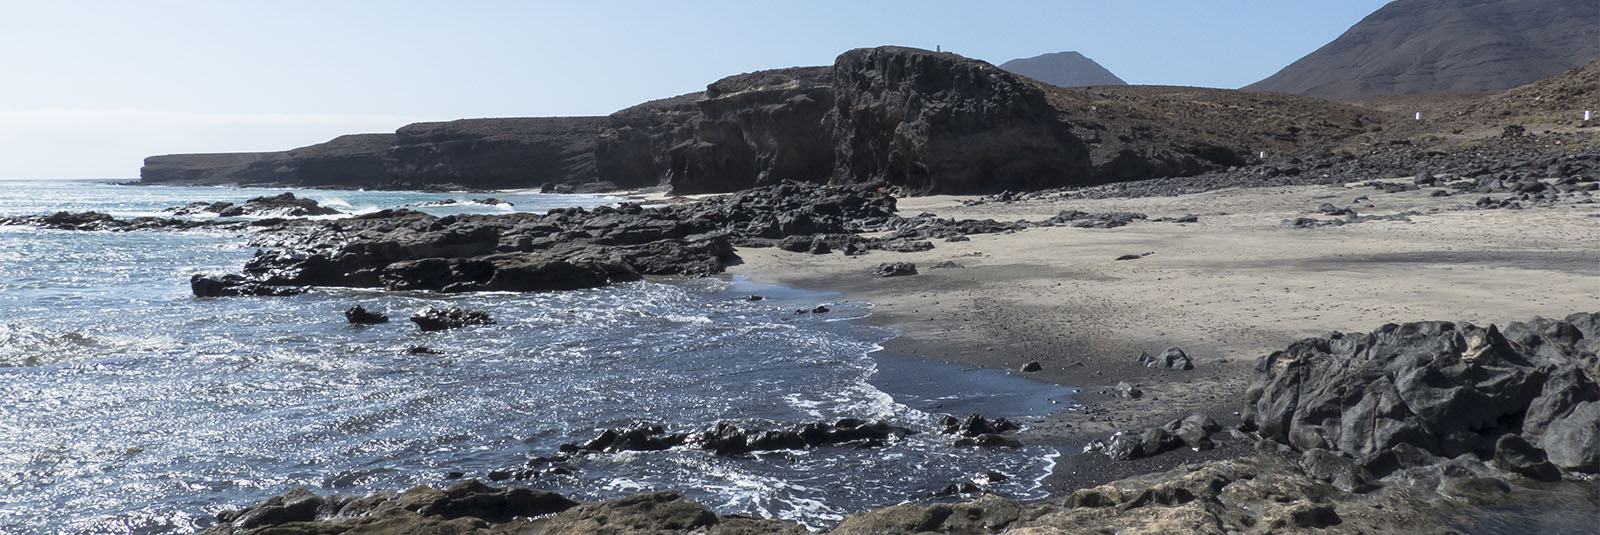 Die Strände Fuerteventuras: Punta del Viento.